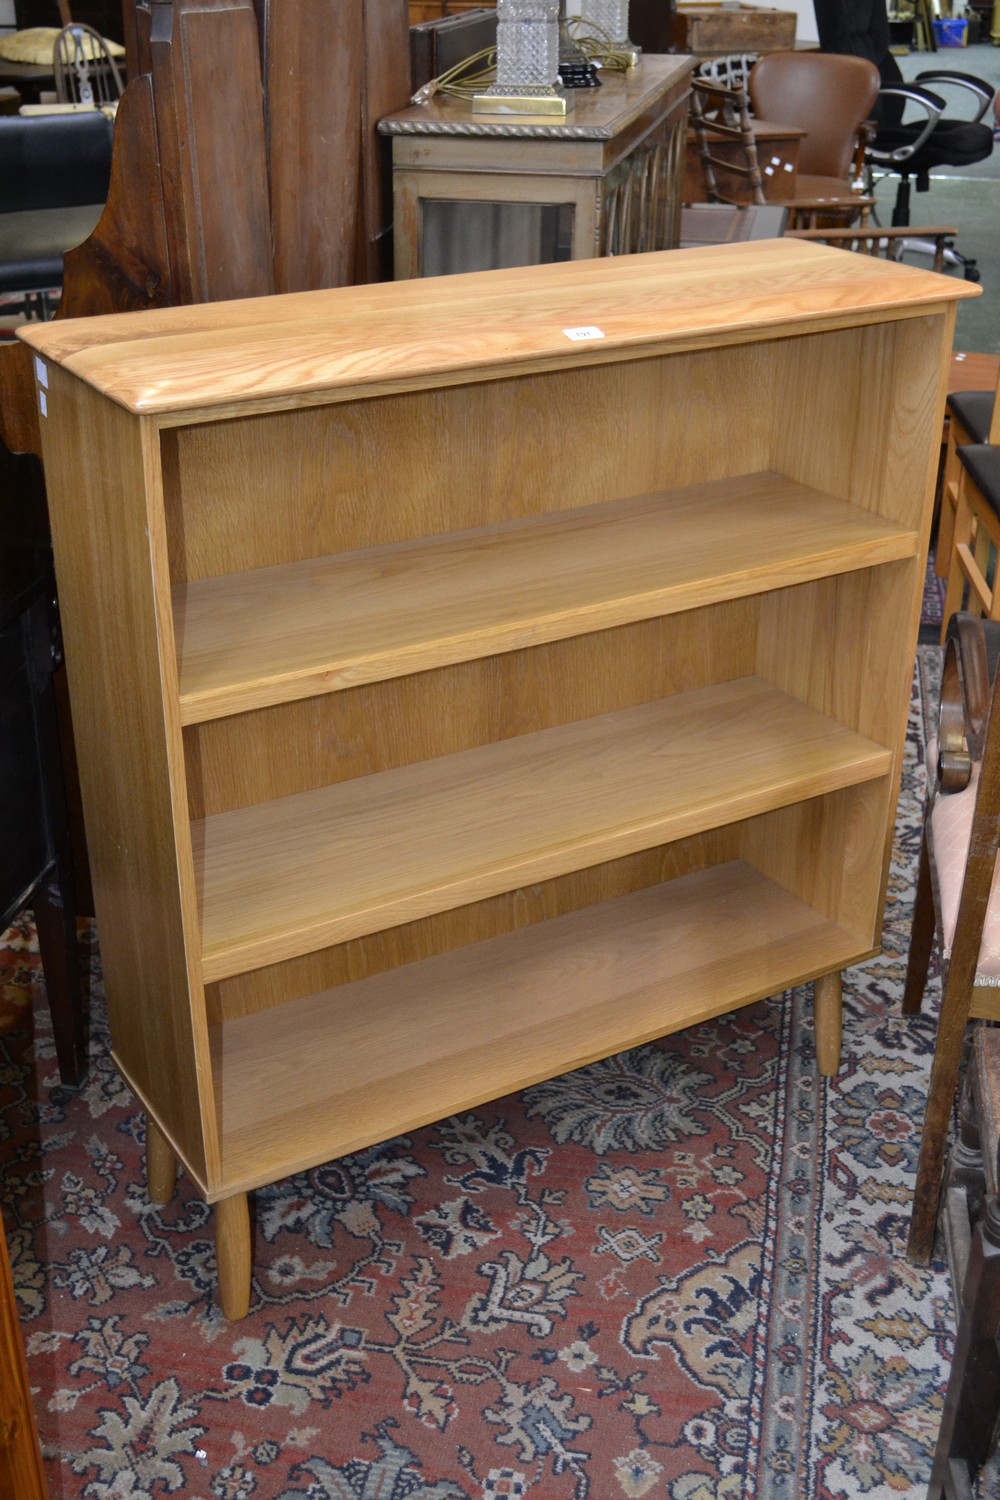 An Ercol style light oak three tier bookcase.